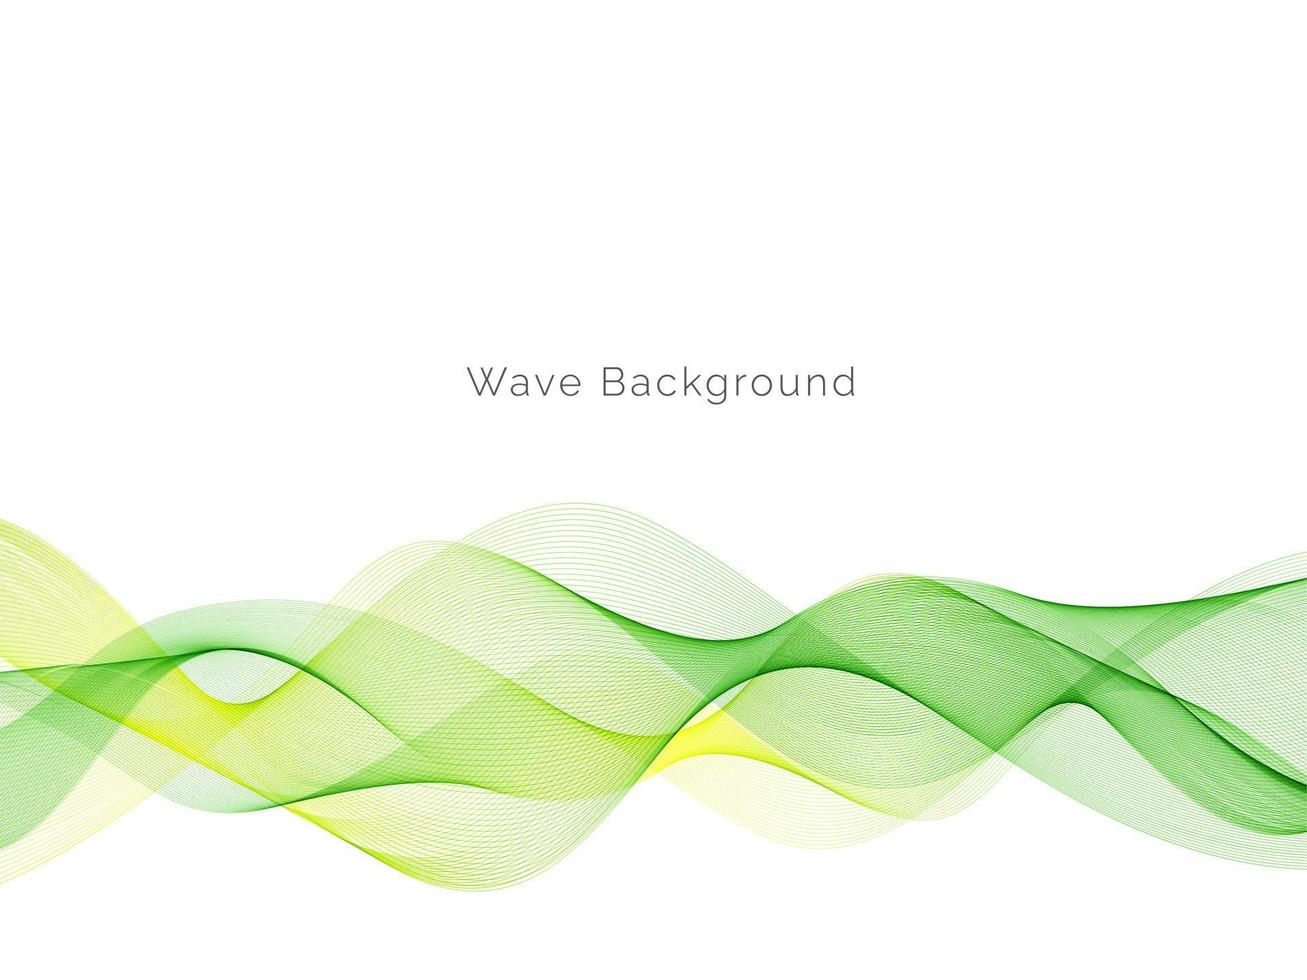 abstrakt grön dekorativ snygg modern vågdesign banner bakgrund vektor